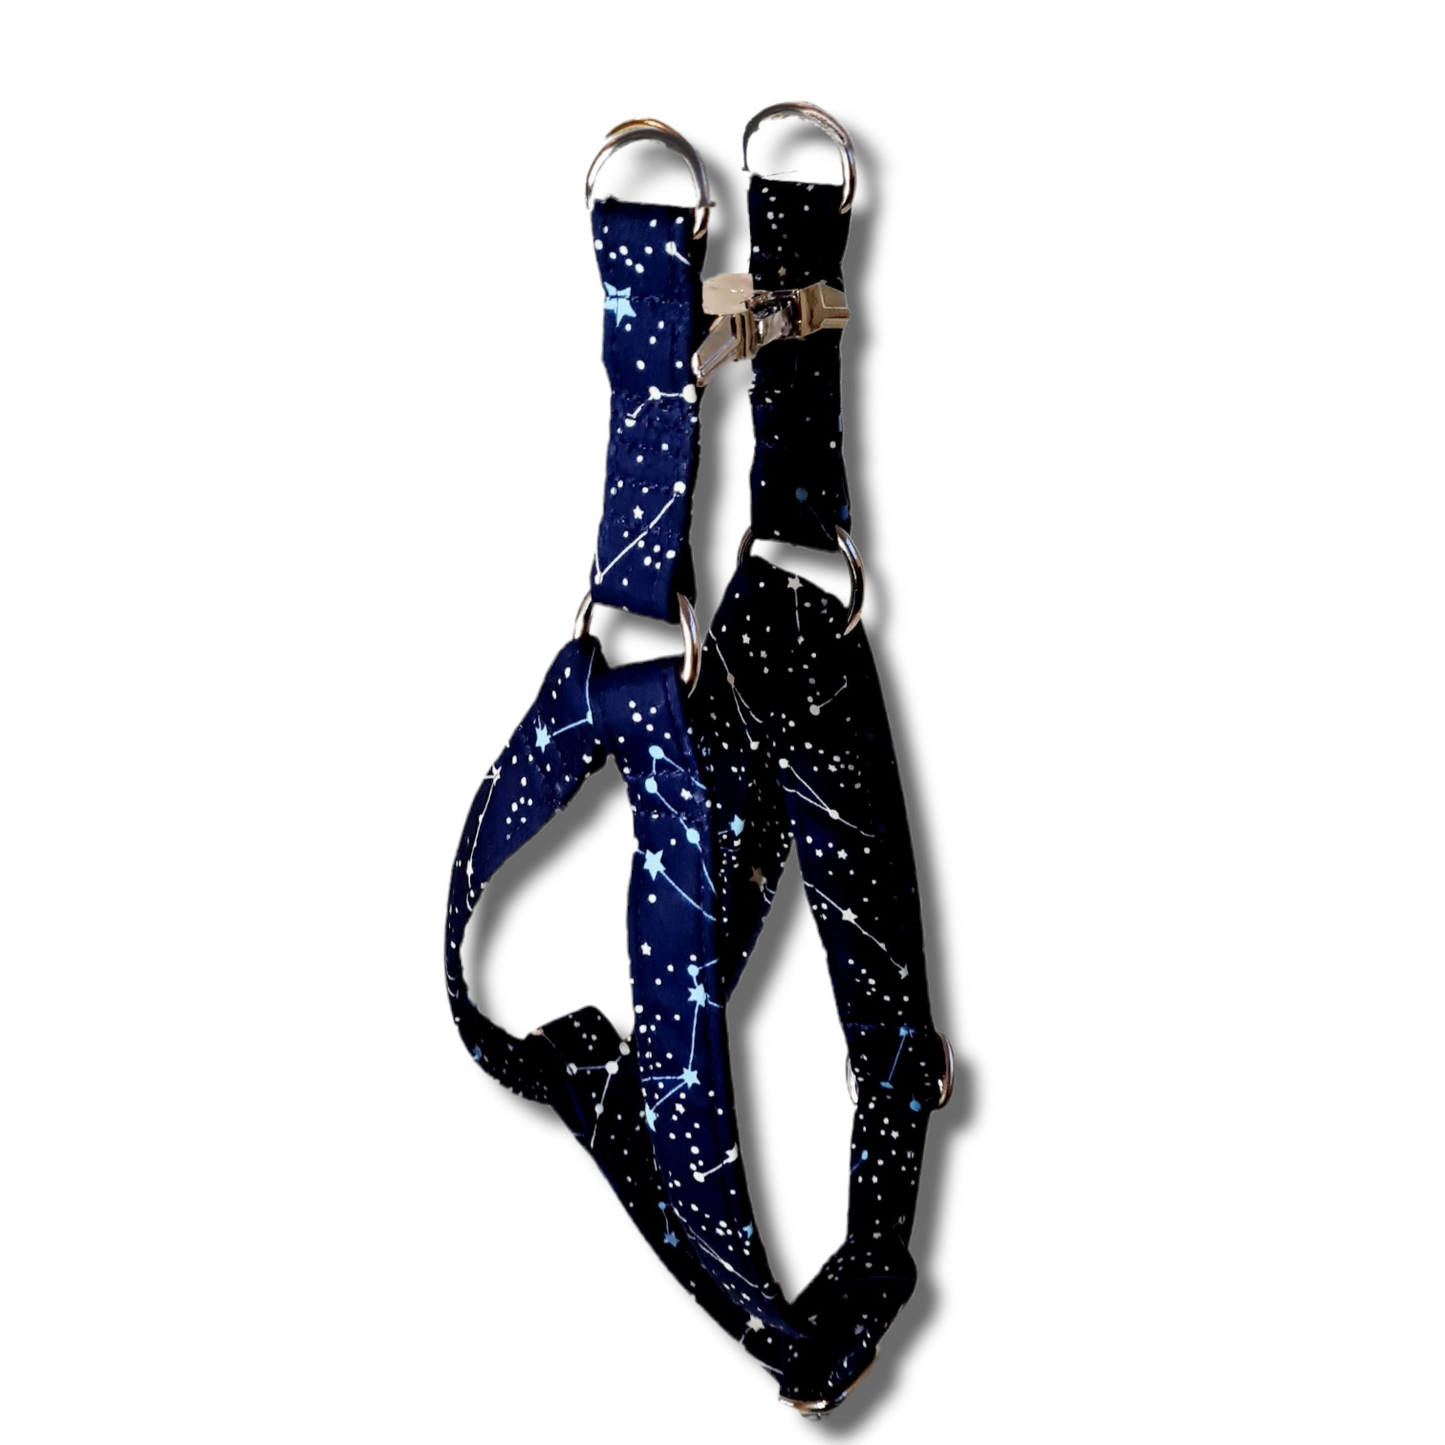 Adjustable step in dog harness - constellation, celestial print